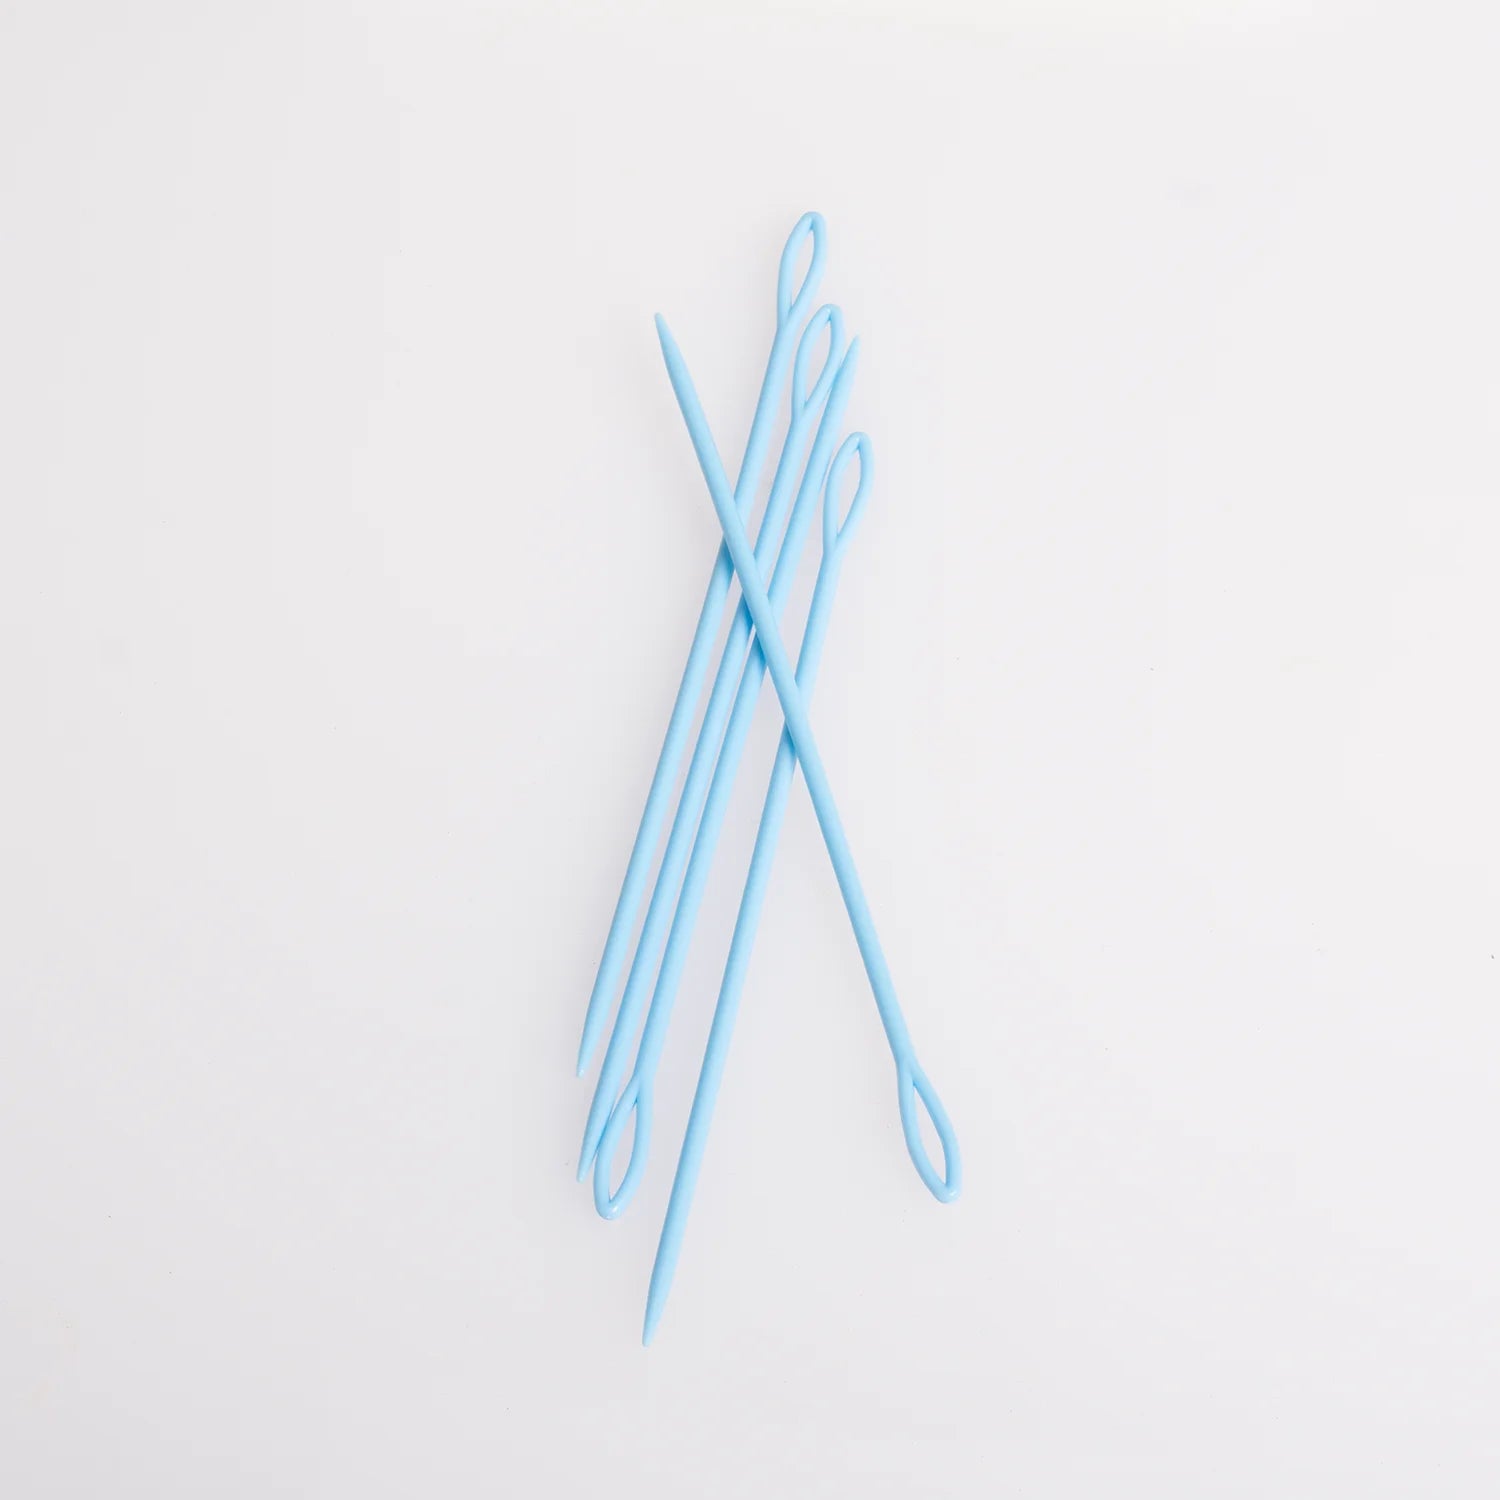 6" plastic weaving needles